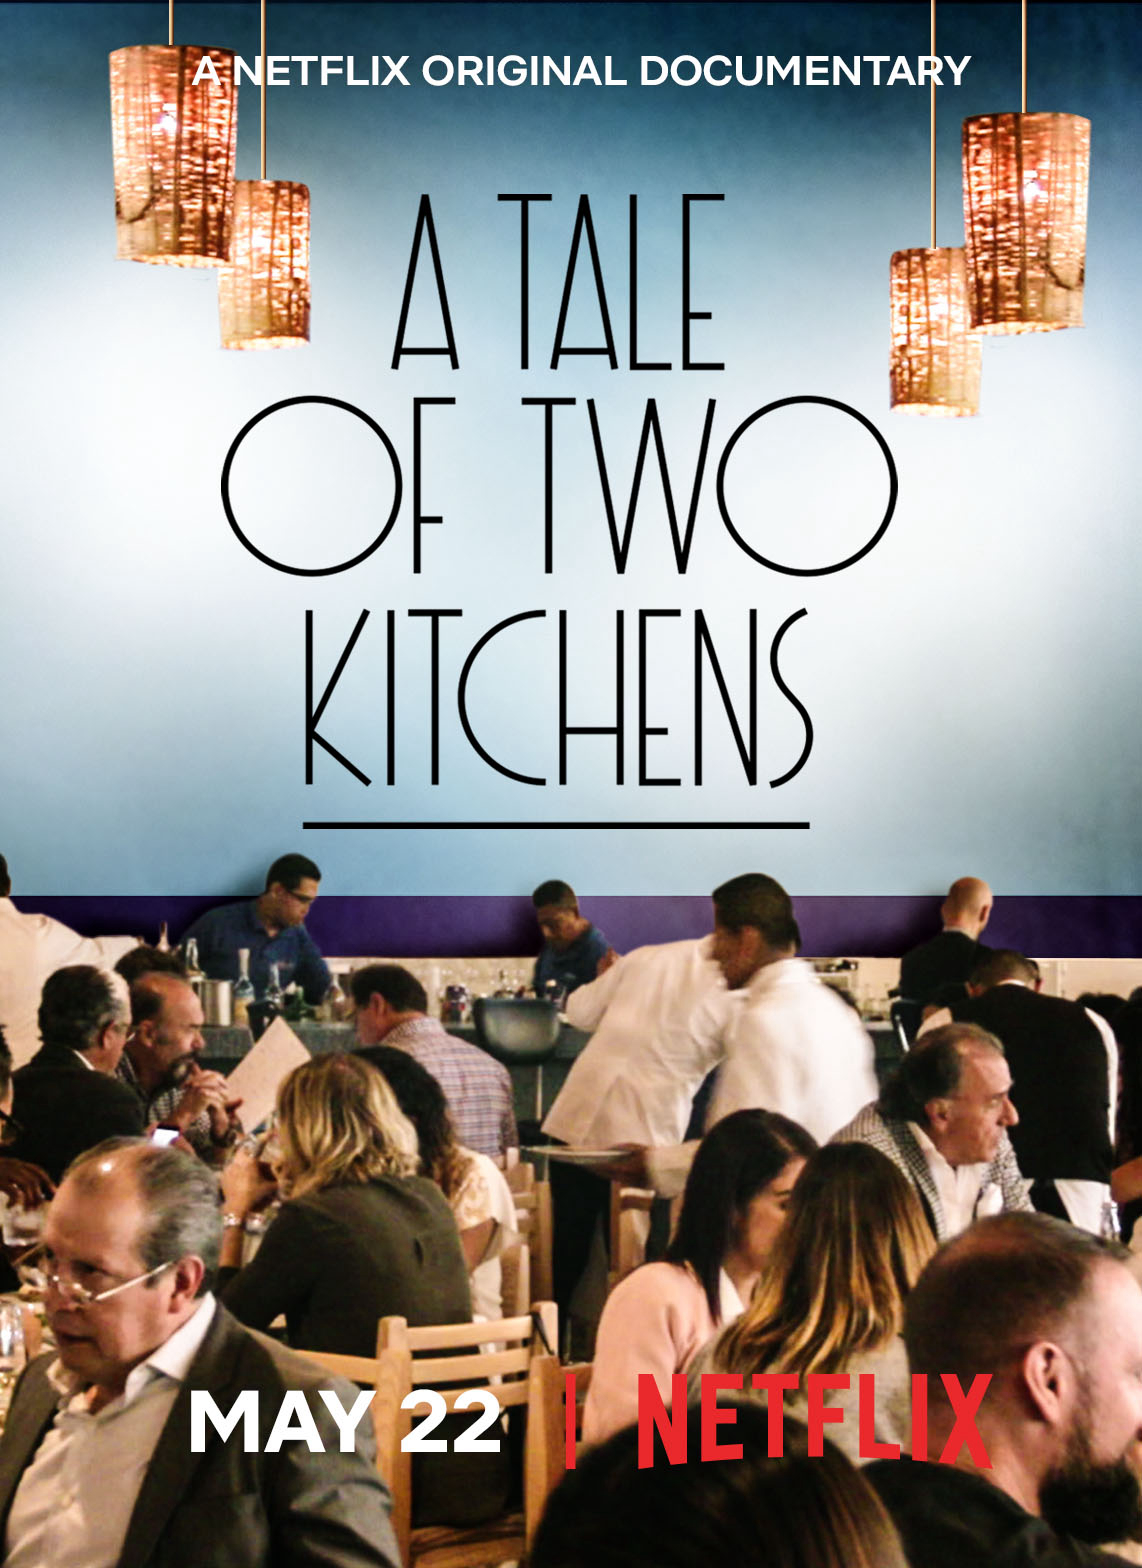 Chuyện hai nhà bếp - A Tale of Two Kitchens